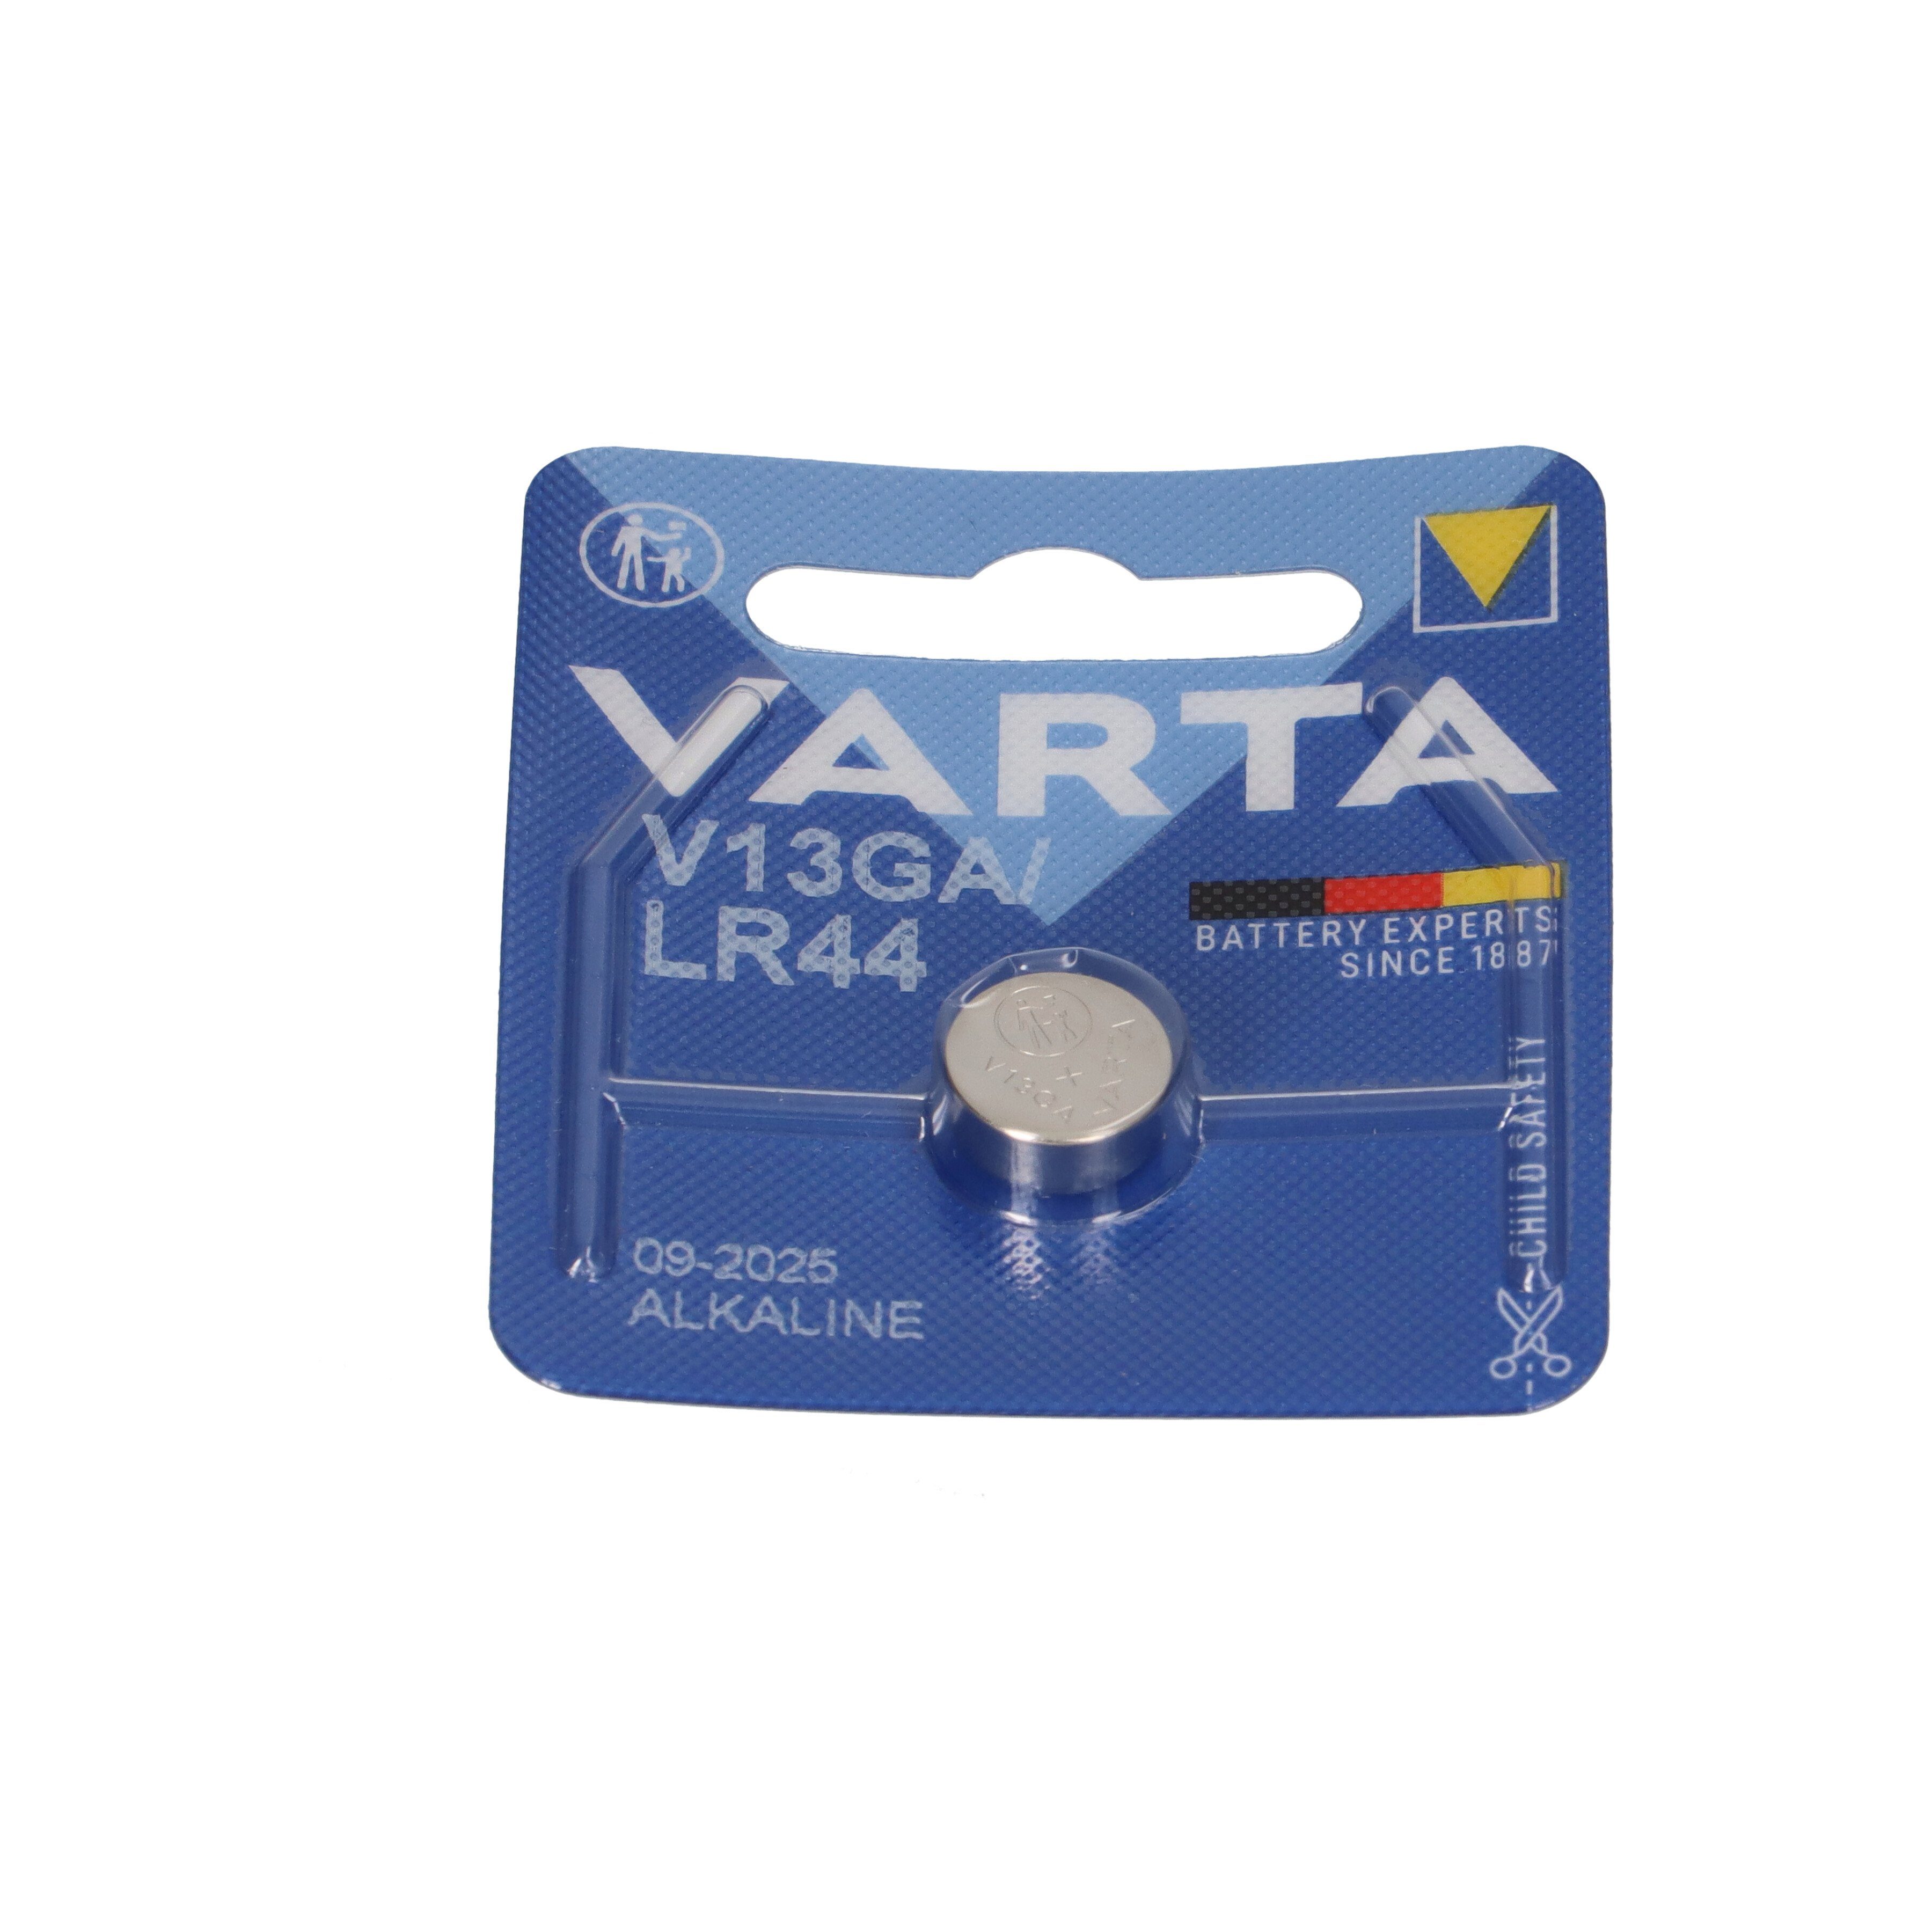 VARTA 30x 13 Knopfzelle / GA A76 / Varta LR V Electronics 44 Alkaline 1,5 V Knopfzelle